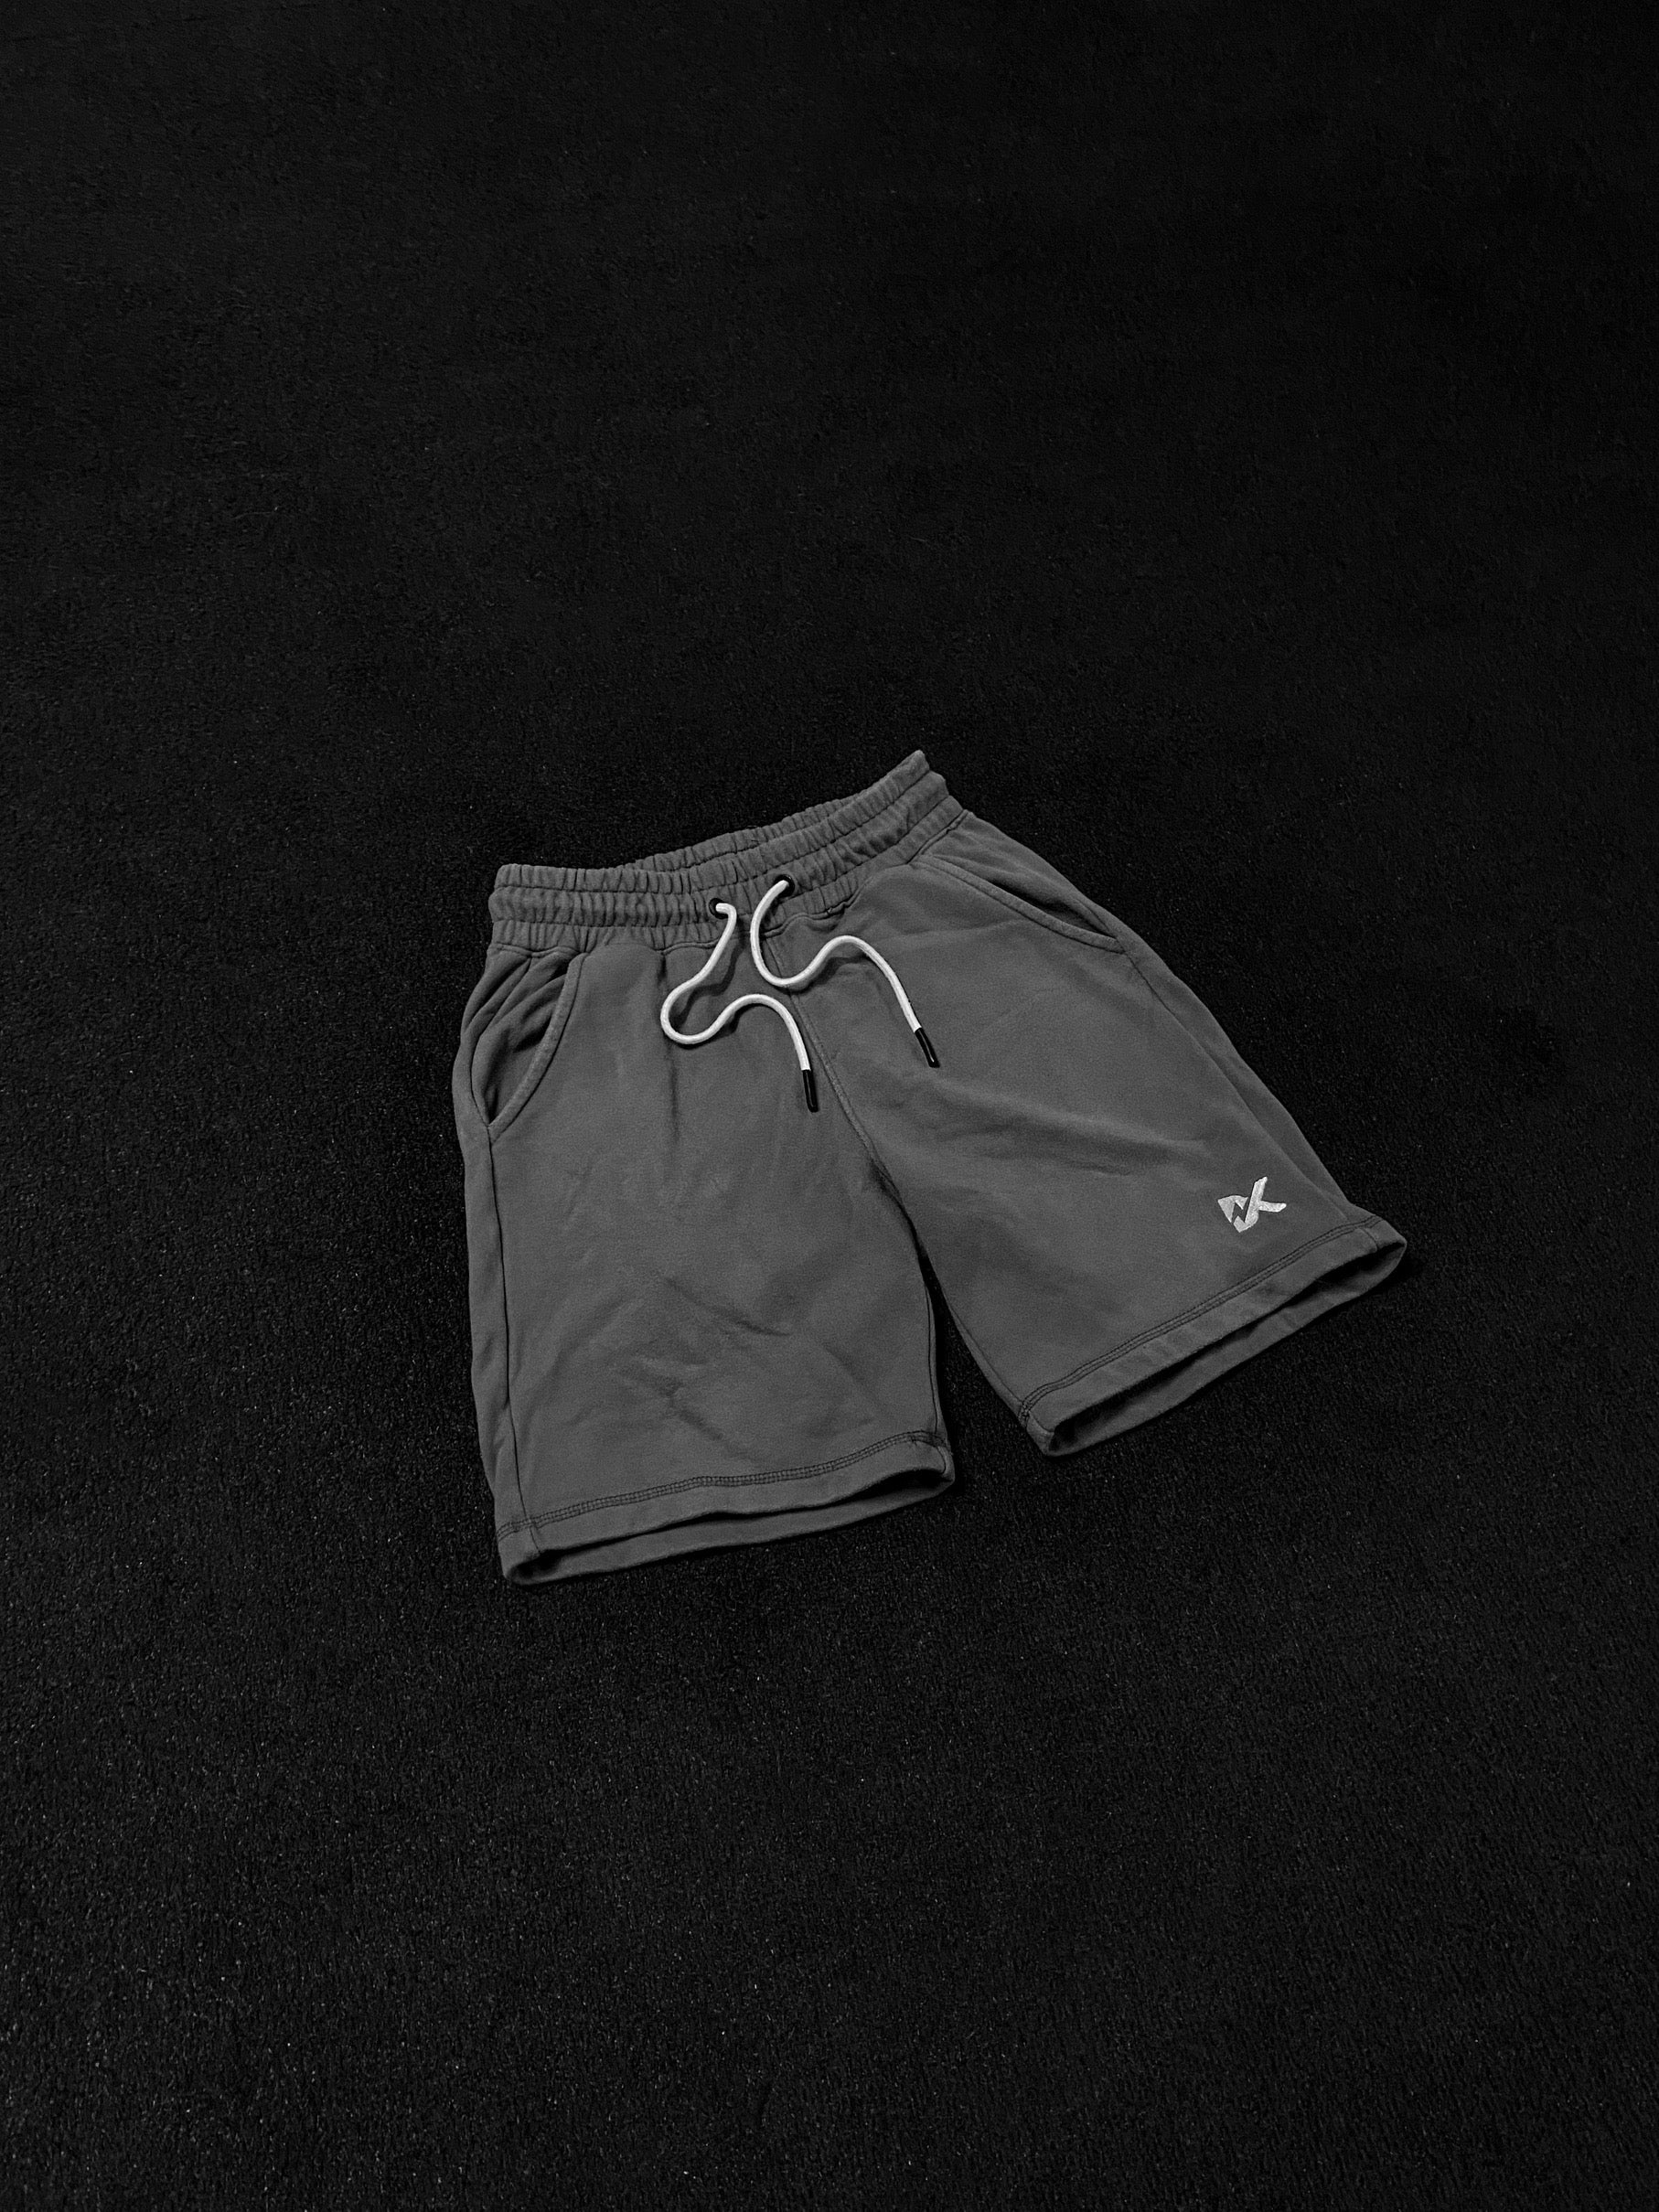 Cotton gym shorts